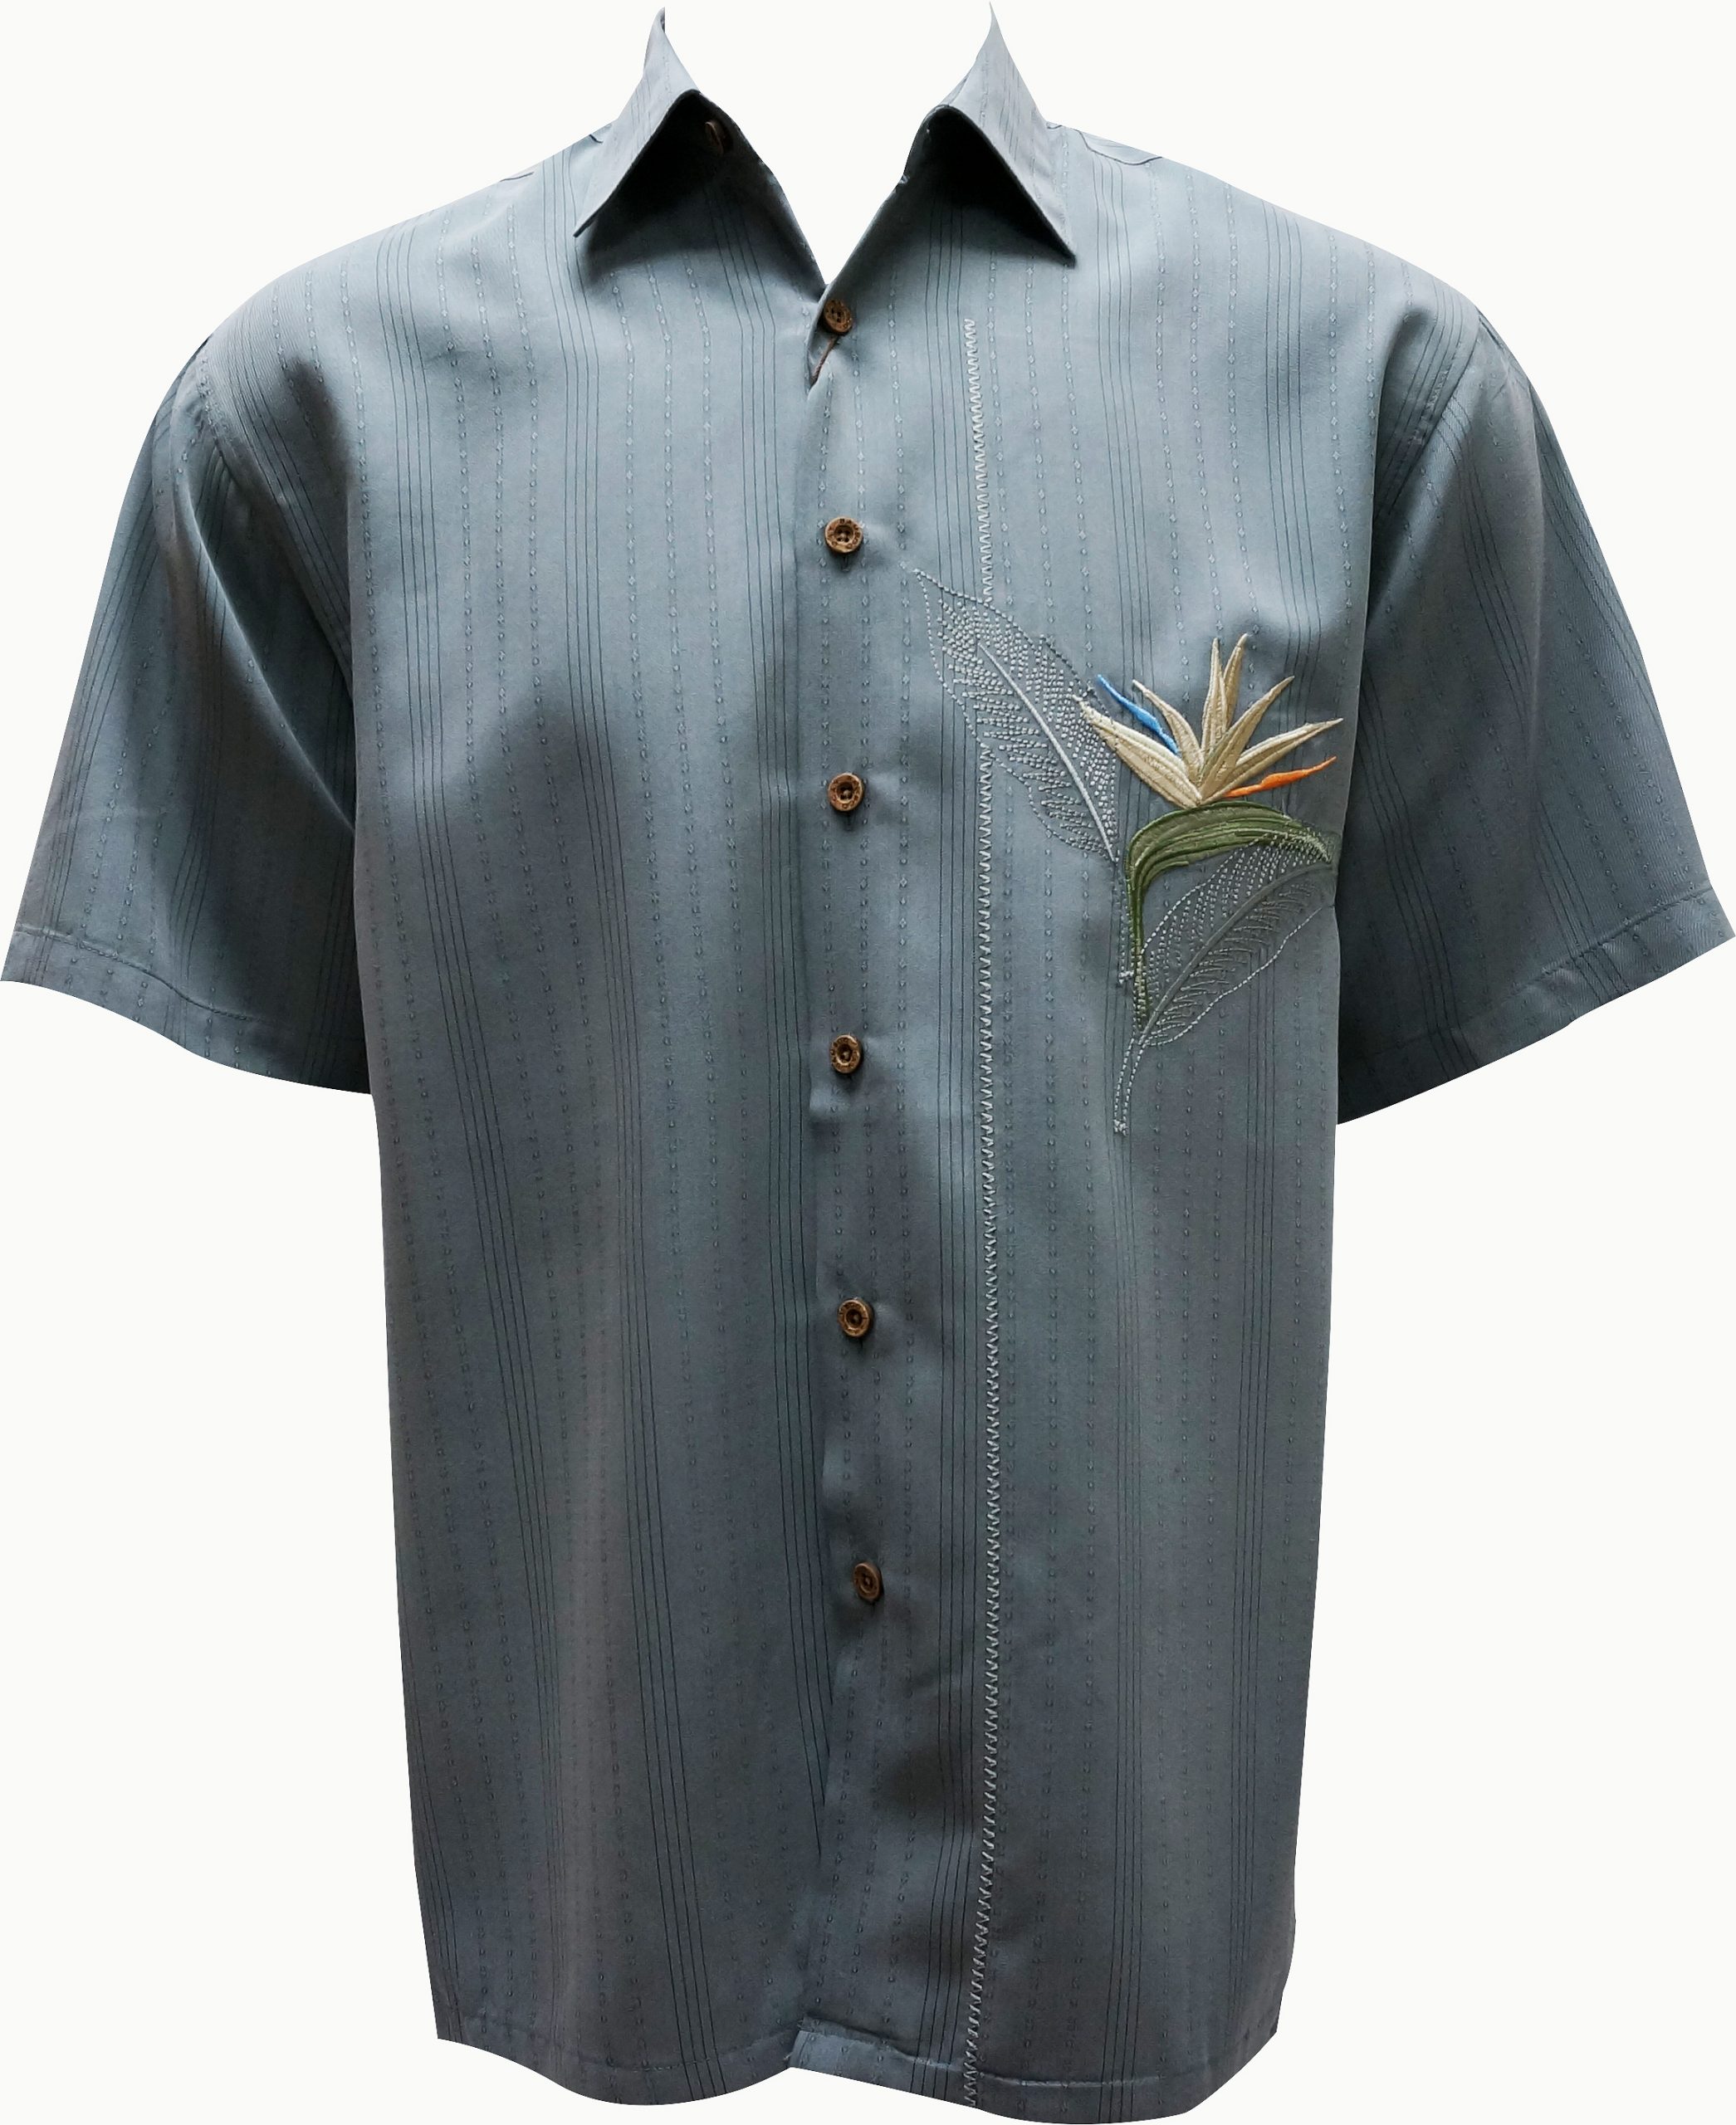 All Star Bird of Paradise Camp Shirt